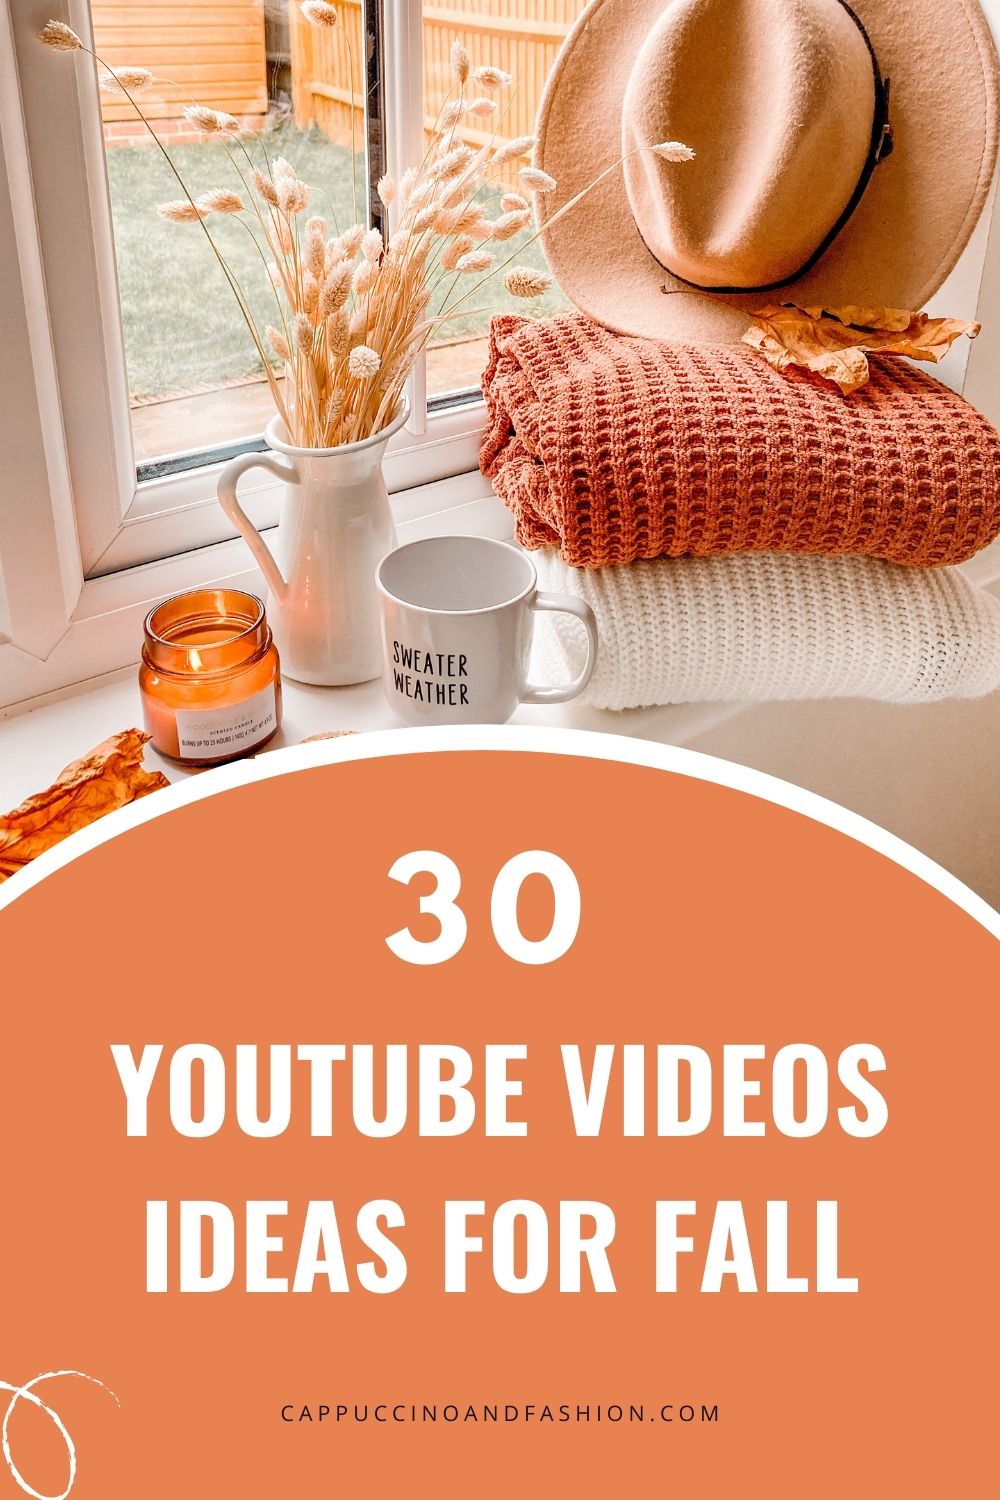 31 Fall Autumn Video Ideas for YouTube 2021